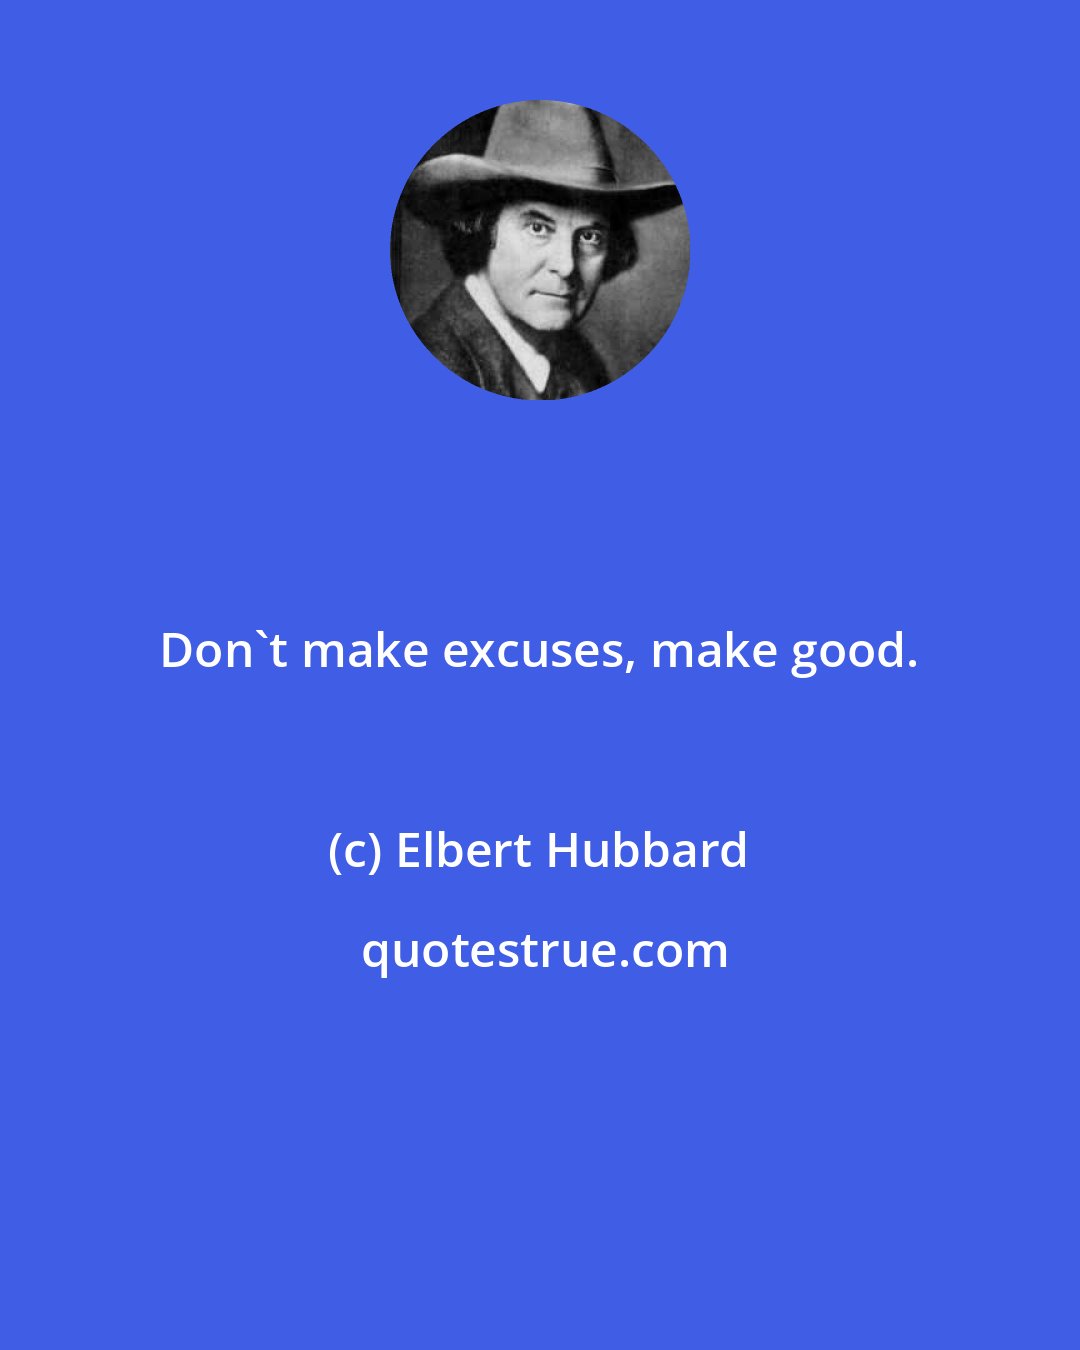 Elbert Hubbard: Don't make excuses, make good.